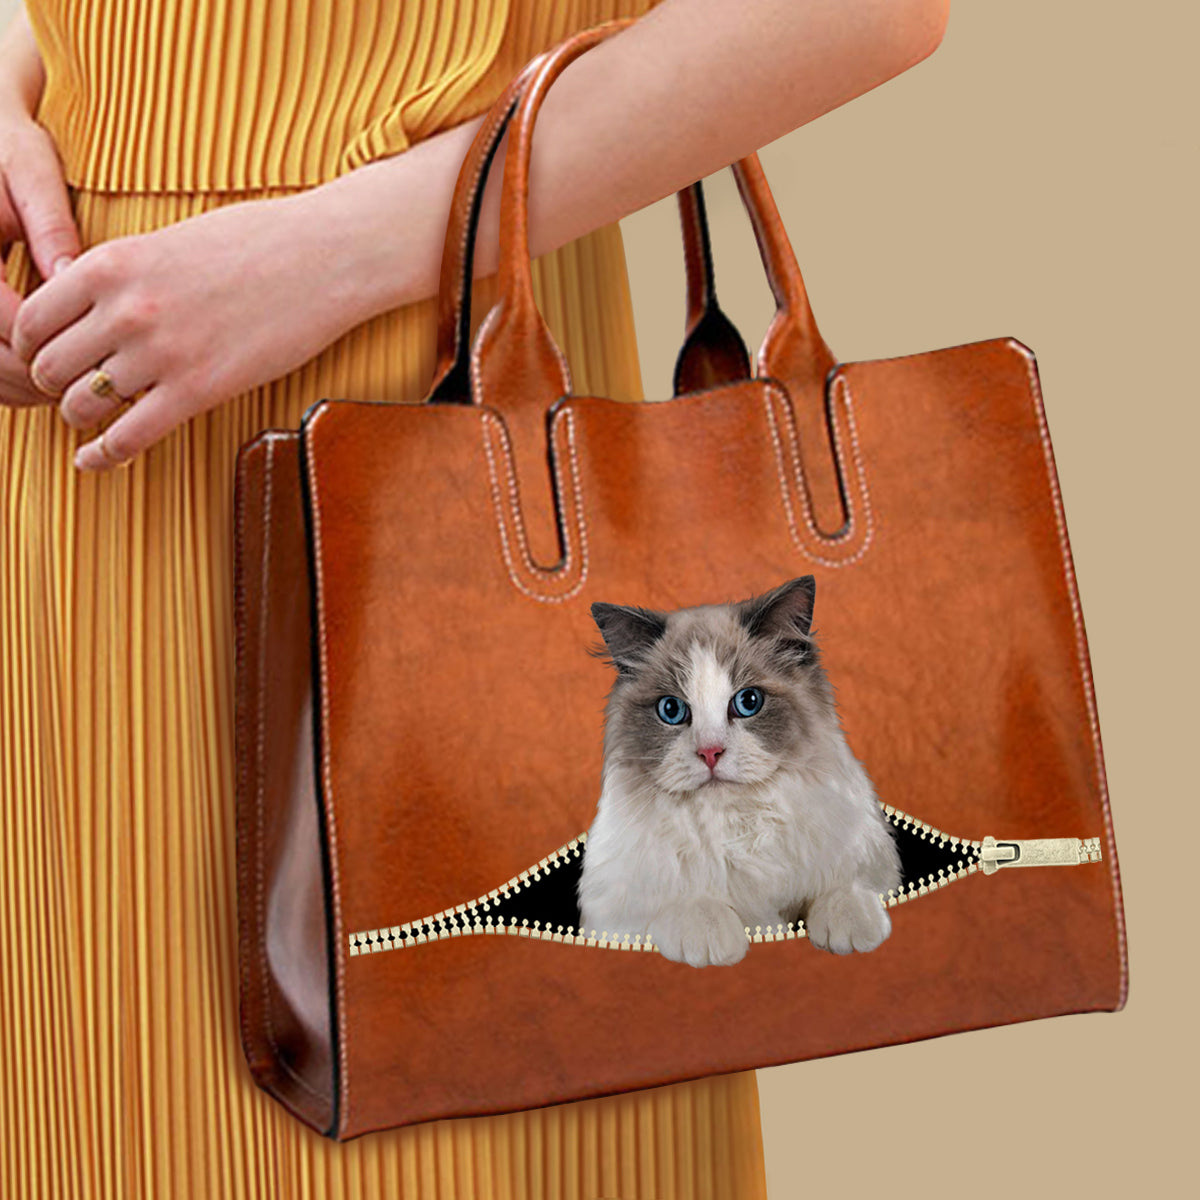 Your Best Companion - Ragdoll Cat Luxury Handbag V1